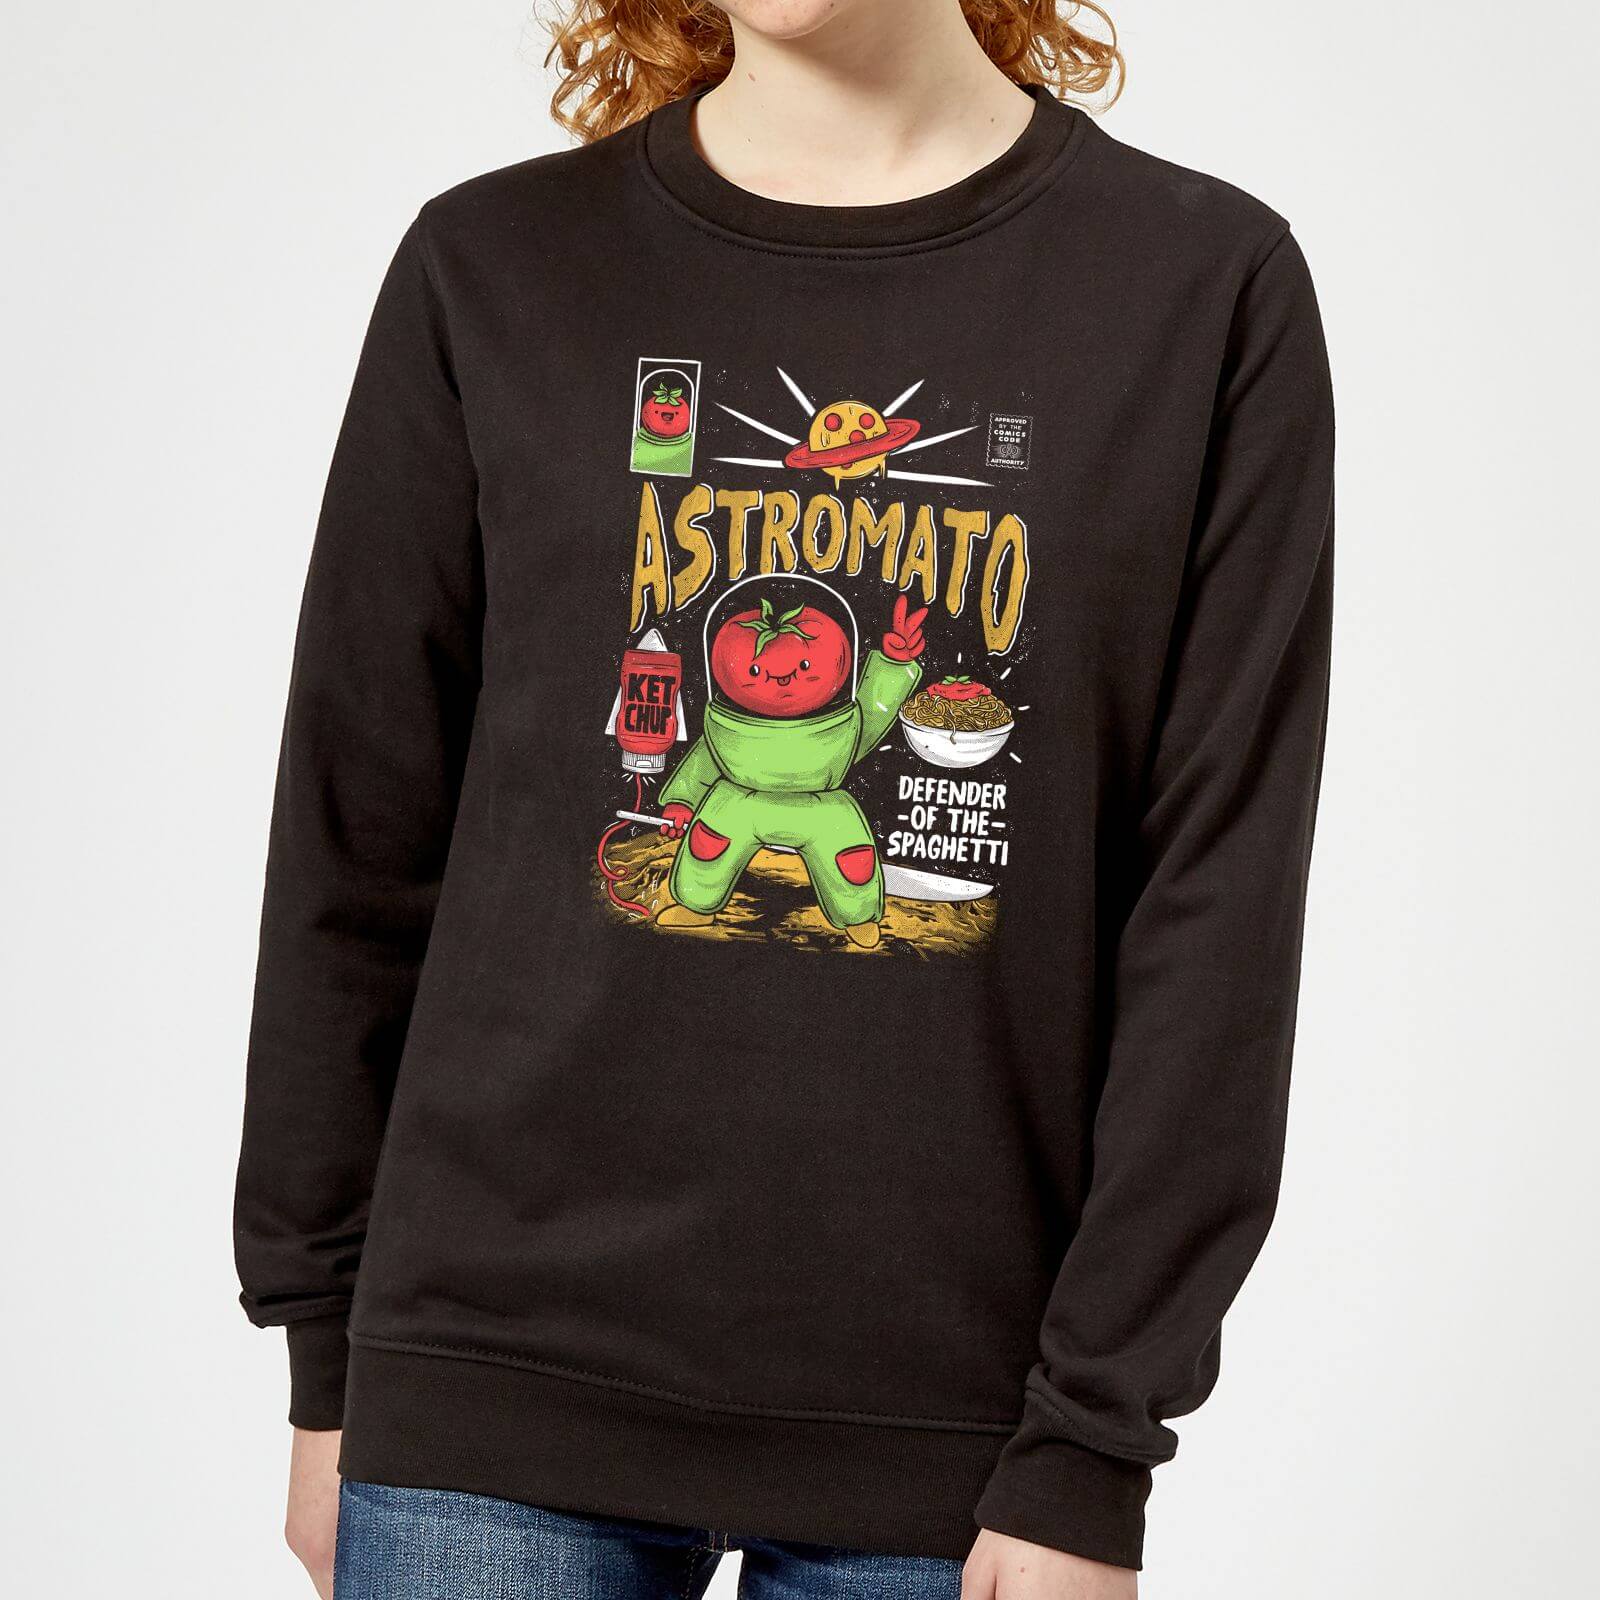 Ilustrata Astromato Women's Sweatshirt - Black - XS - Black